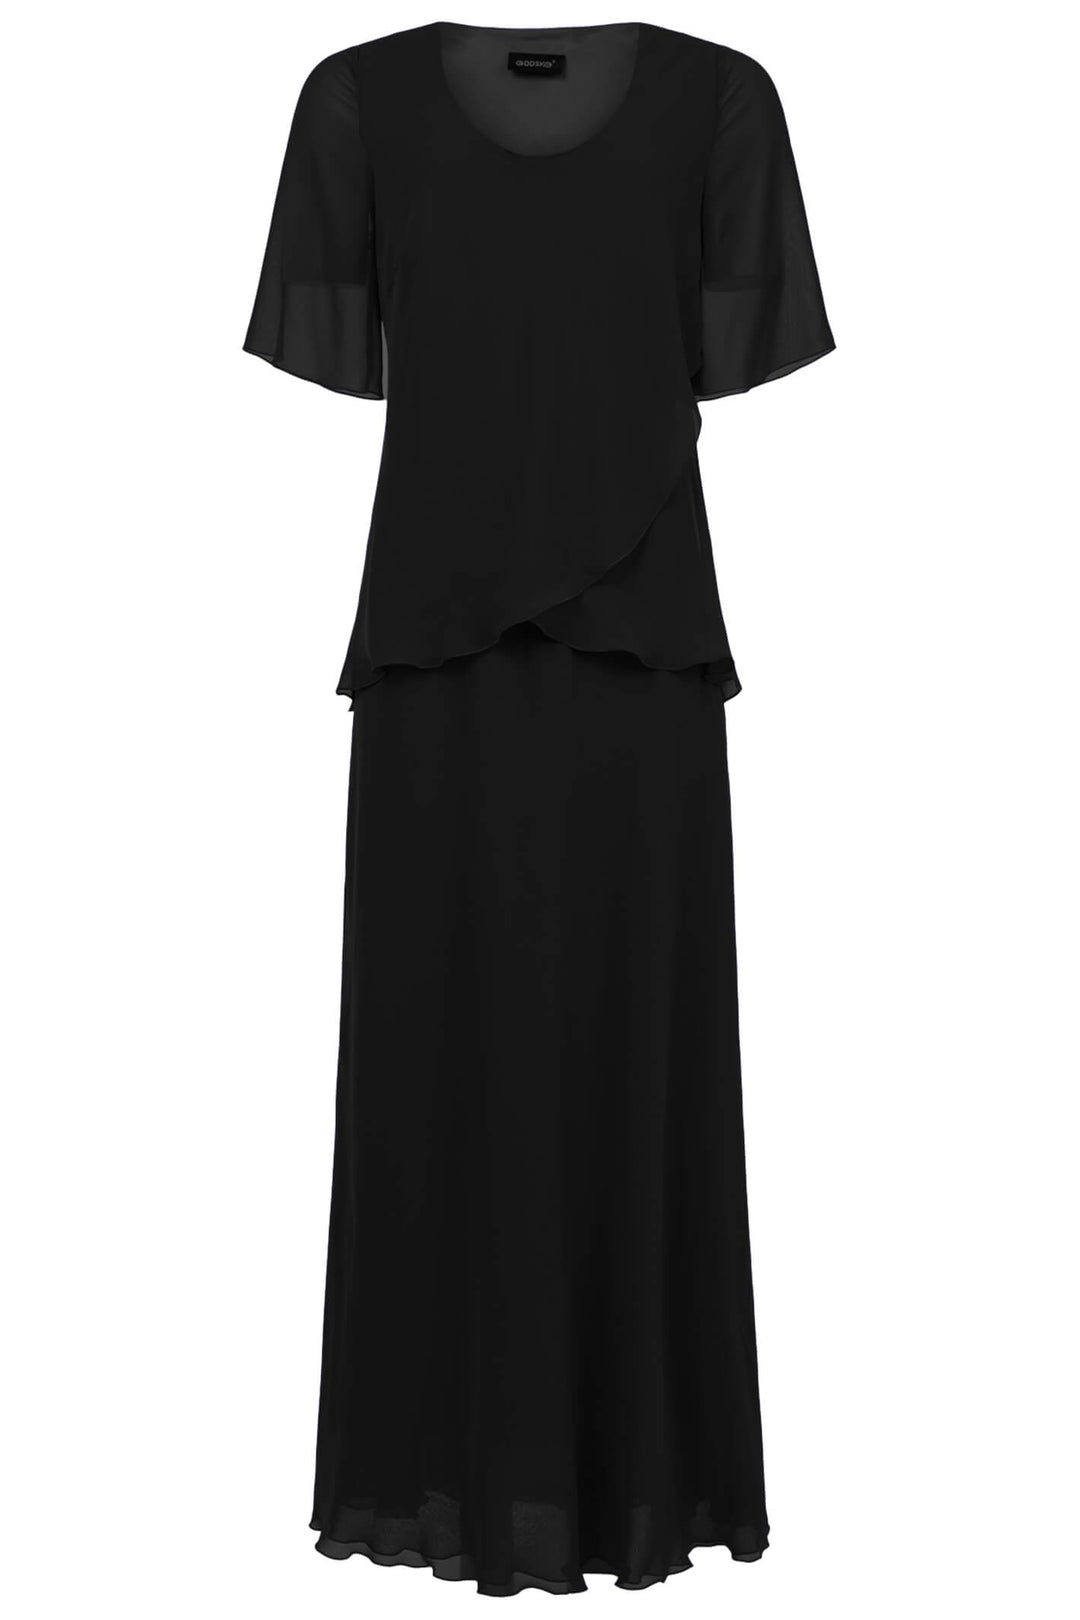 Tia 18749-4086 900 Black Floaty Chiffon Dress - Dotique